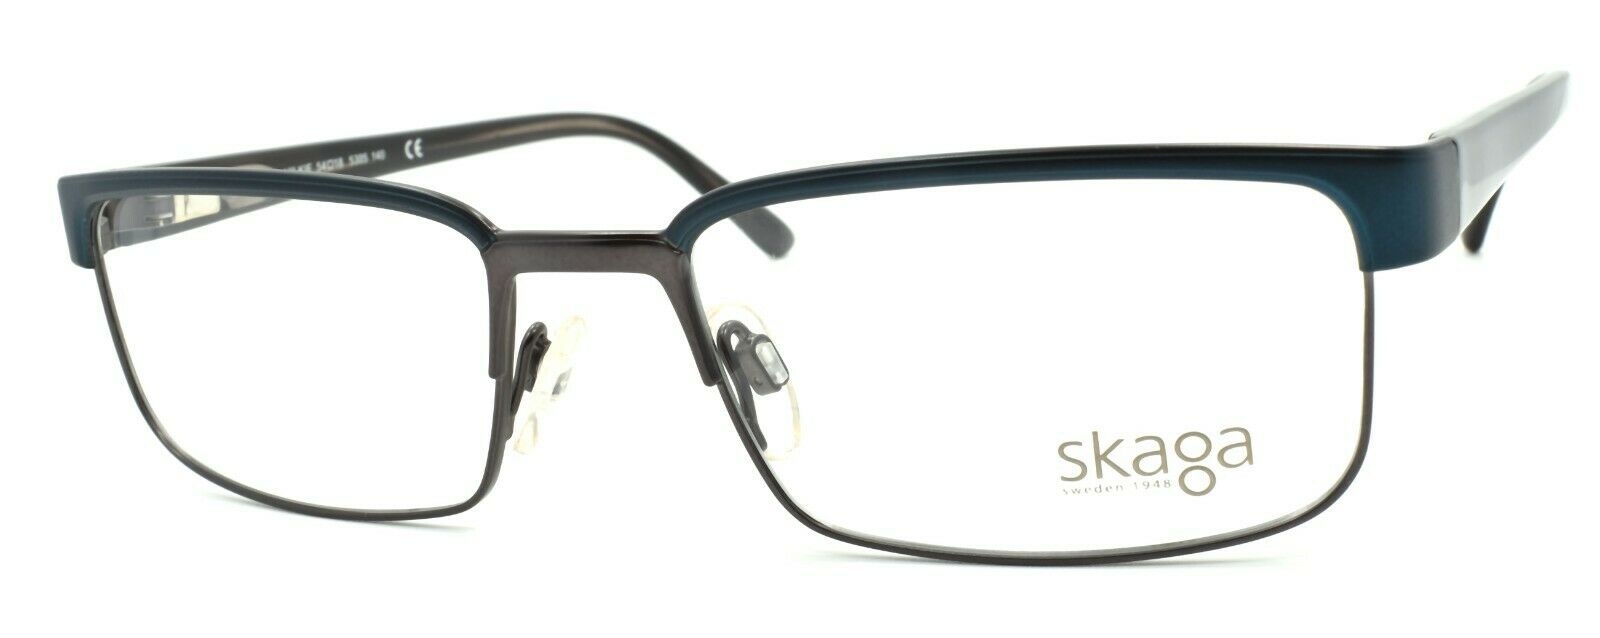 1-Skaga 2530 Hilkie 5305 Men's Eyeglasses Frames 54-18-140 Blue-IKSpecs